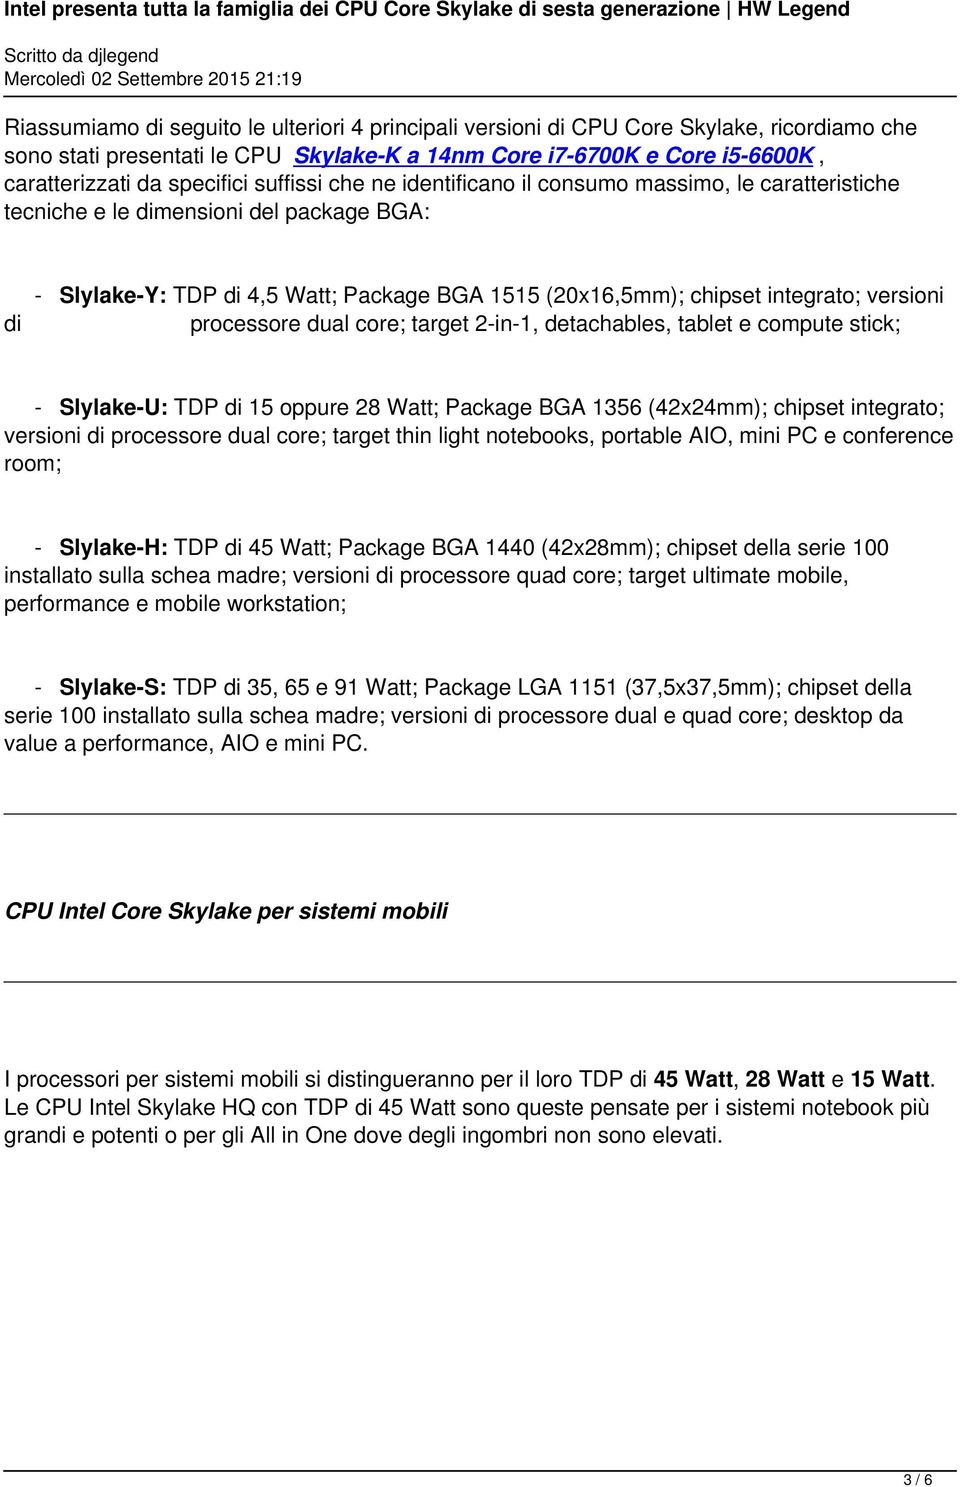 versioni processore dual core; target 2-in-1, detachables, tablet e compute stick; - Slylake-U: TDP di 15 oppure 28 Watt; Package BGA 1356 (42x24mm); chipset integrato; versioni di processore dual